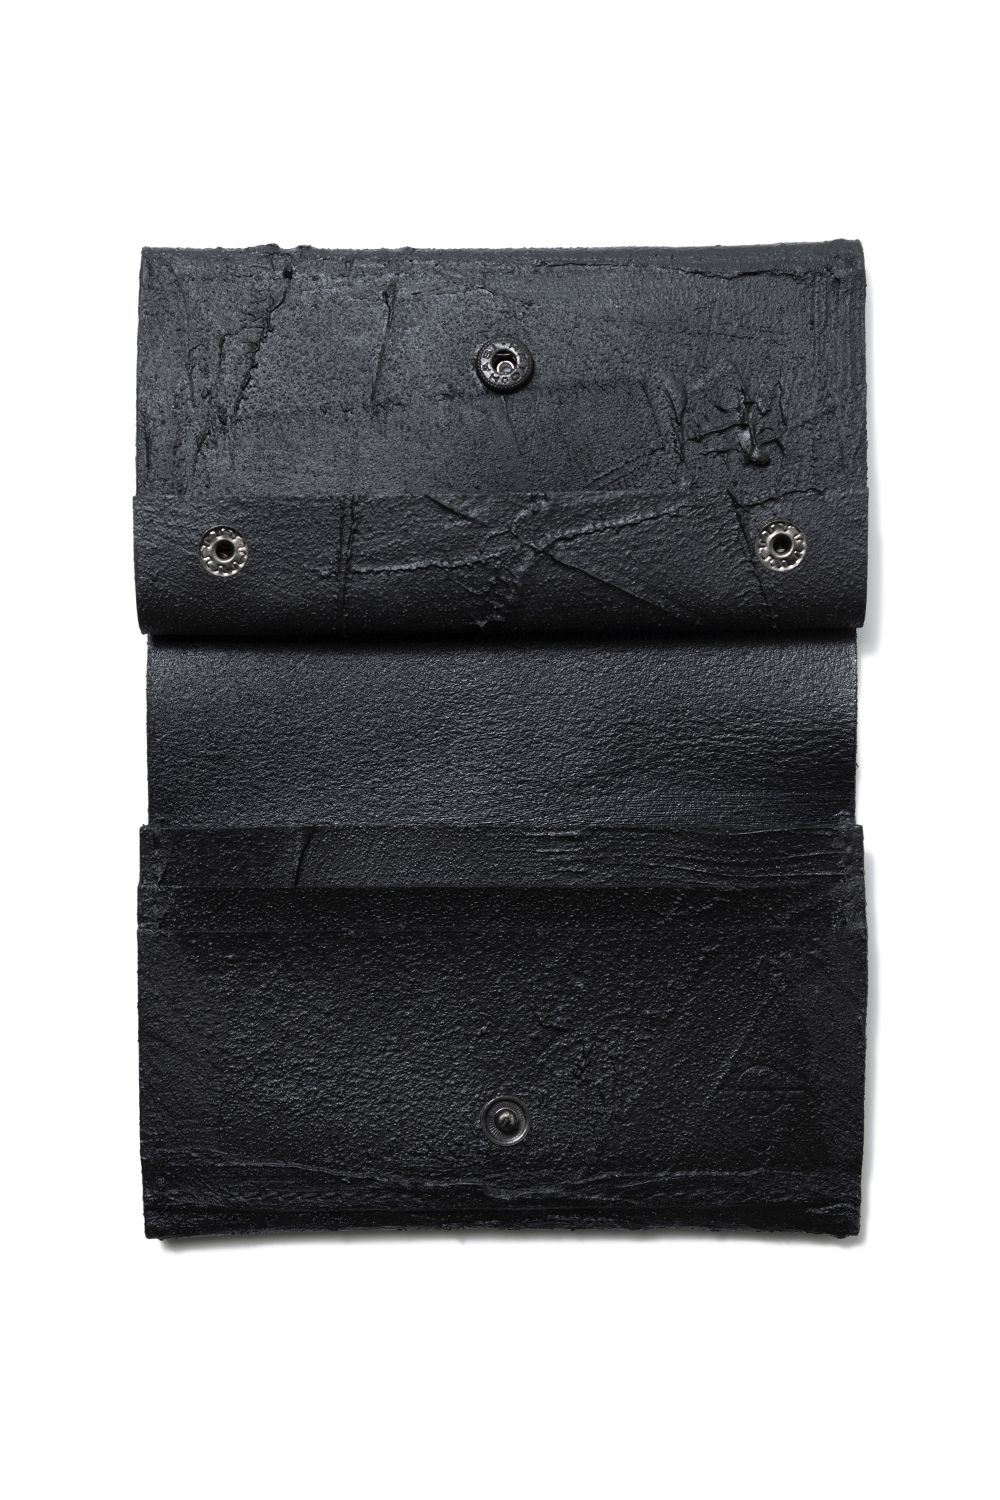 KAGARI YUSUKE - 【ラスト1点】二つ折り財布 [黒い壁] / mw13-bk 